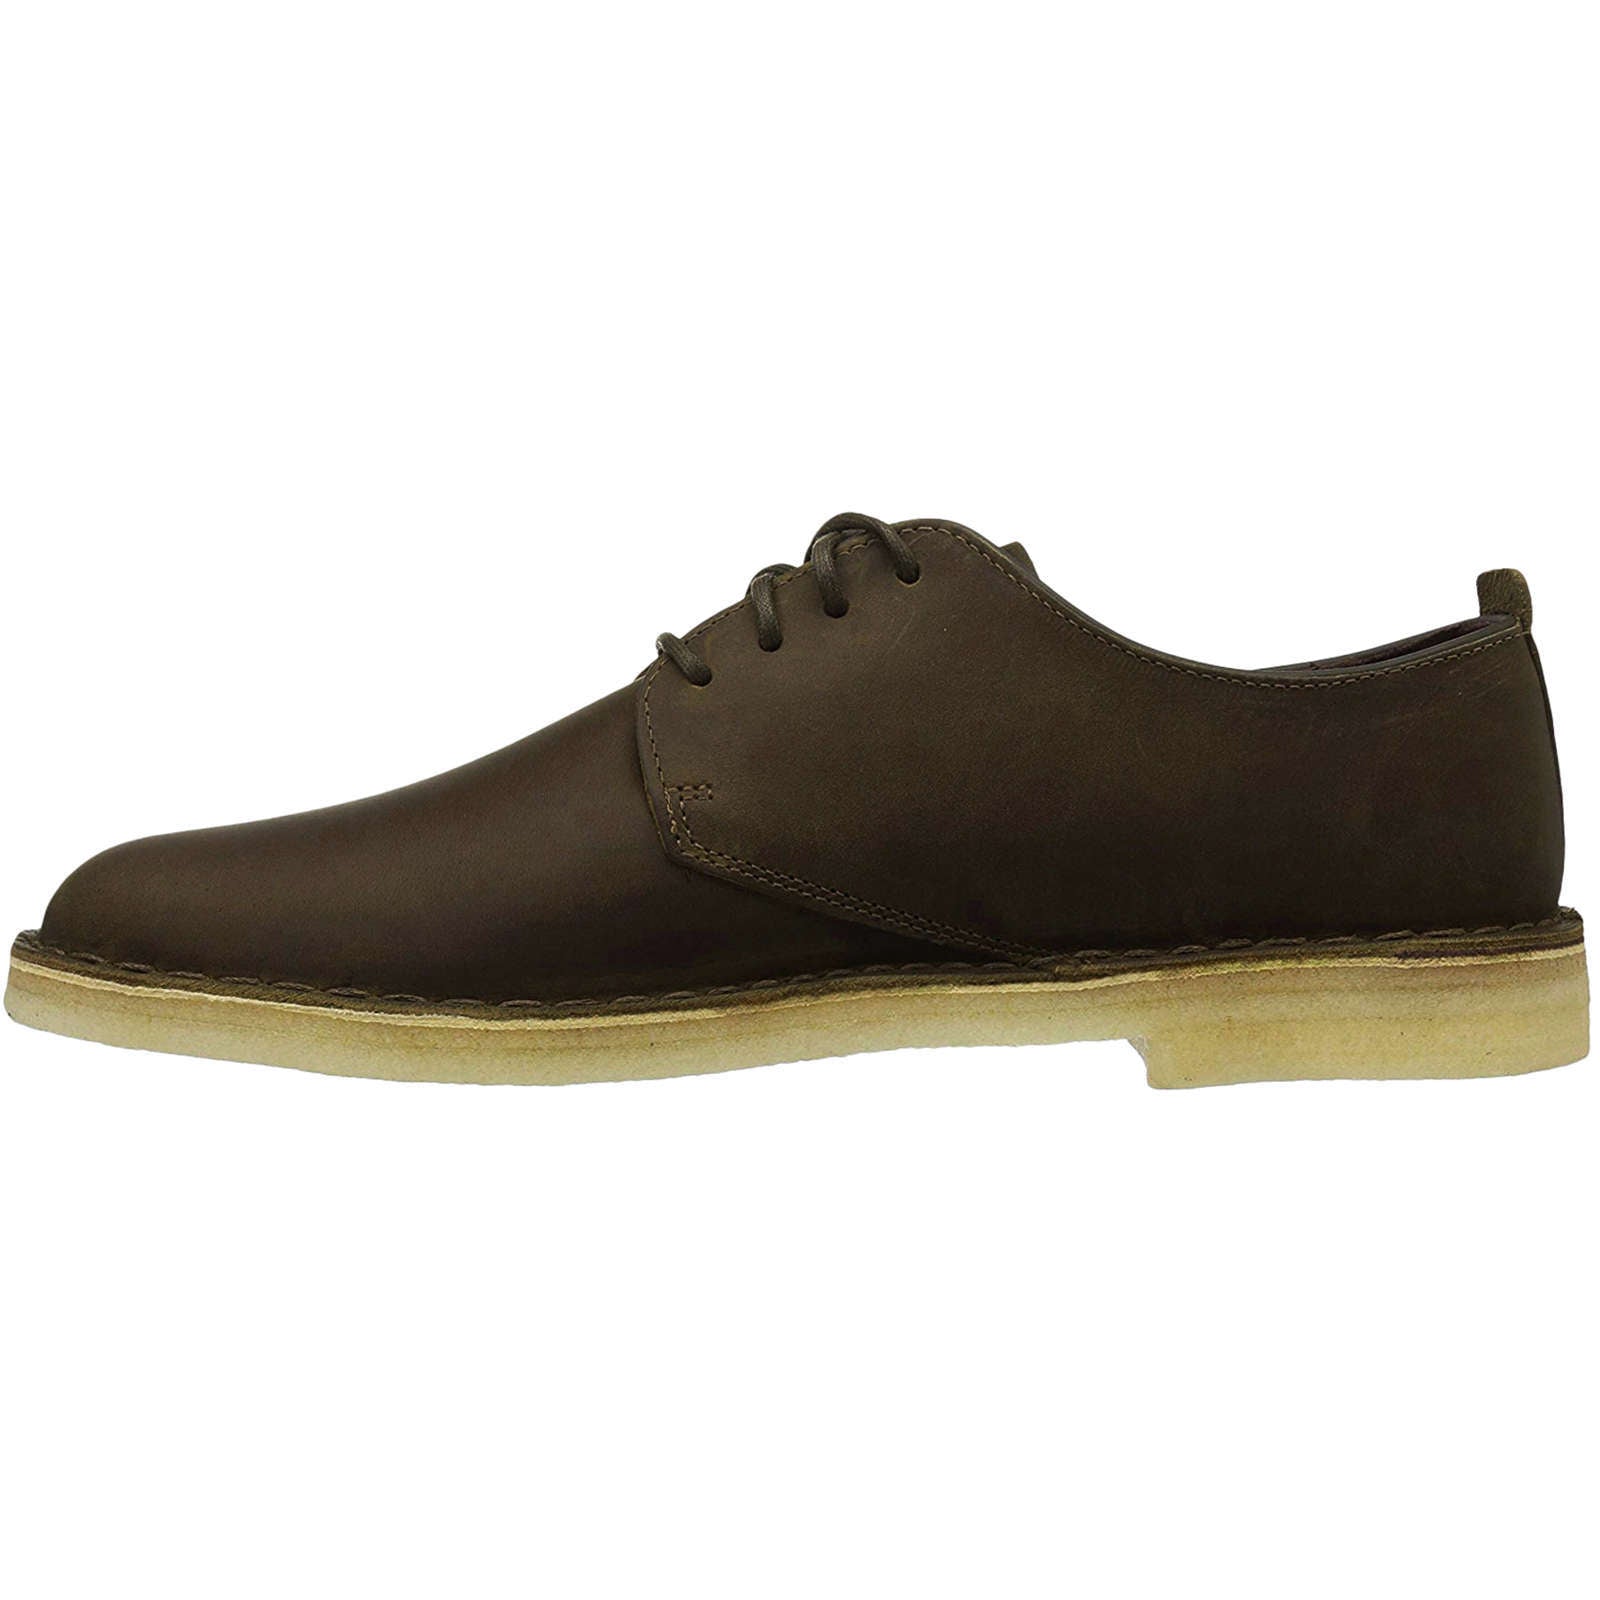 Clarks Originals Desert London Leather Men's Shoes#color_beeswax